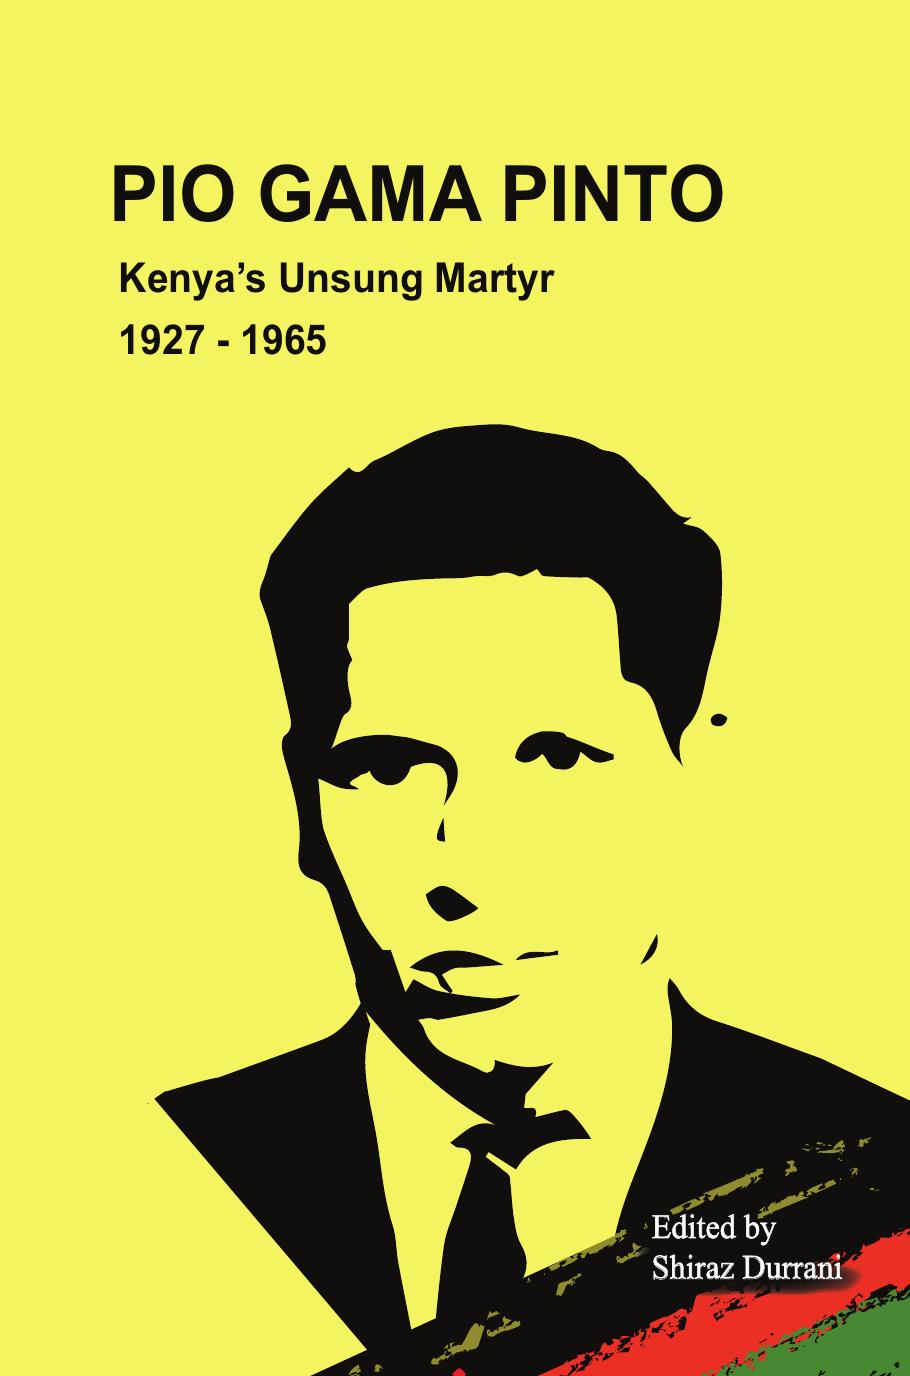 Pio Gama Pinto: Kenya's Unsung Martyr. 1927 - 1965 by Shiraz Durrani